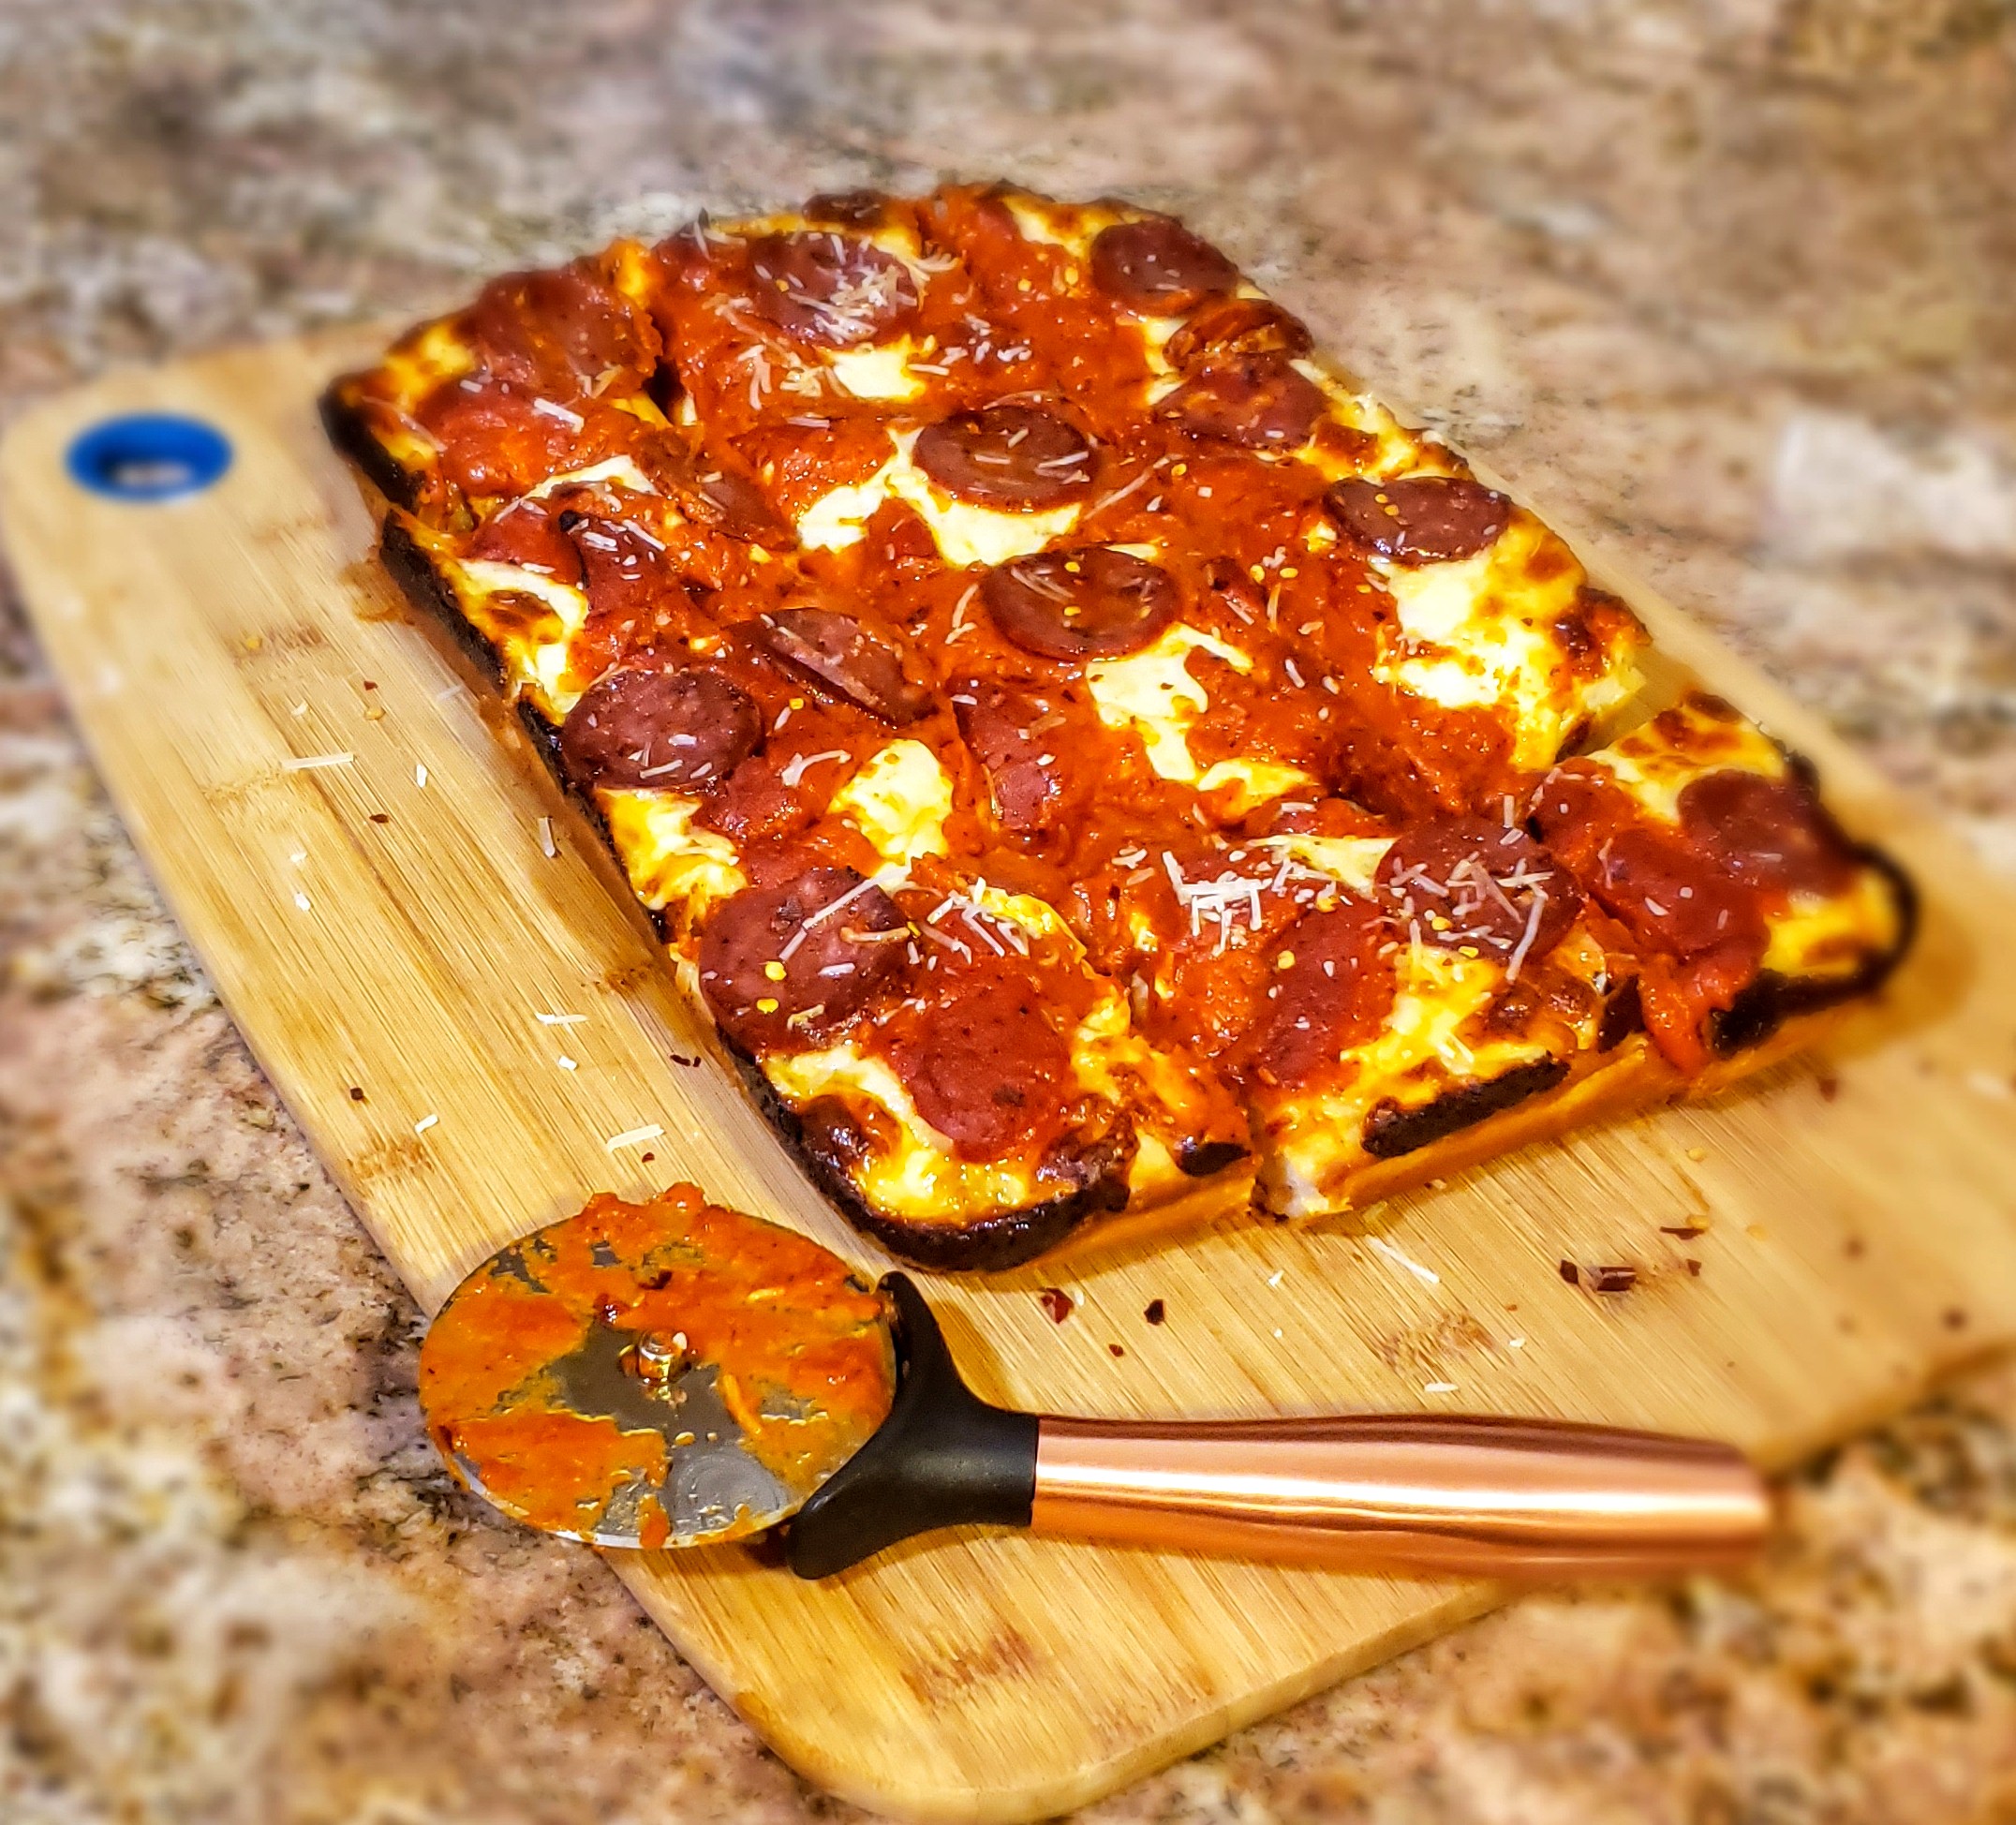 https://flavorbible.com/wp-content/uploads/2020/05/Detroit-Style-Pizza-Finished-Money-Shot.jpg